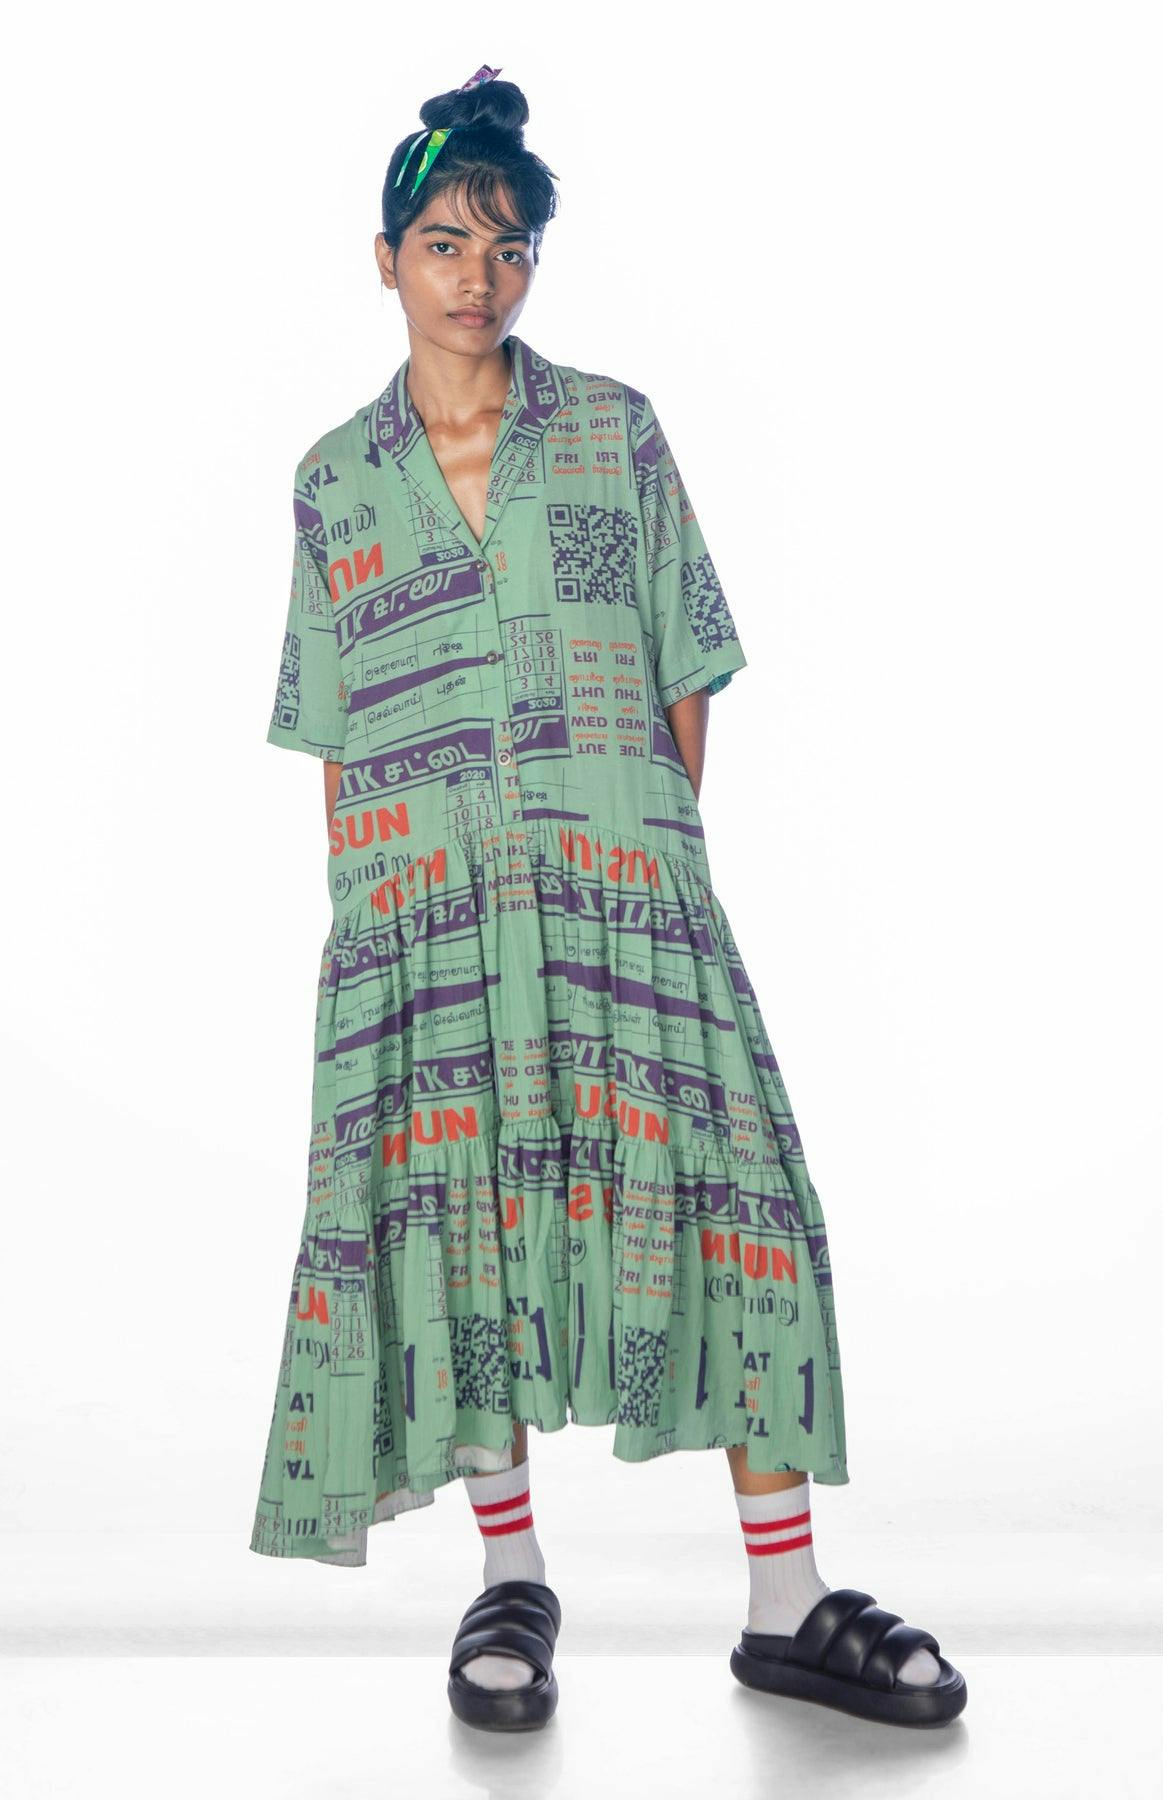 CALENDAR DRESS, a product by Doh tak keh